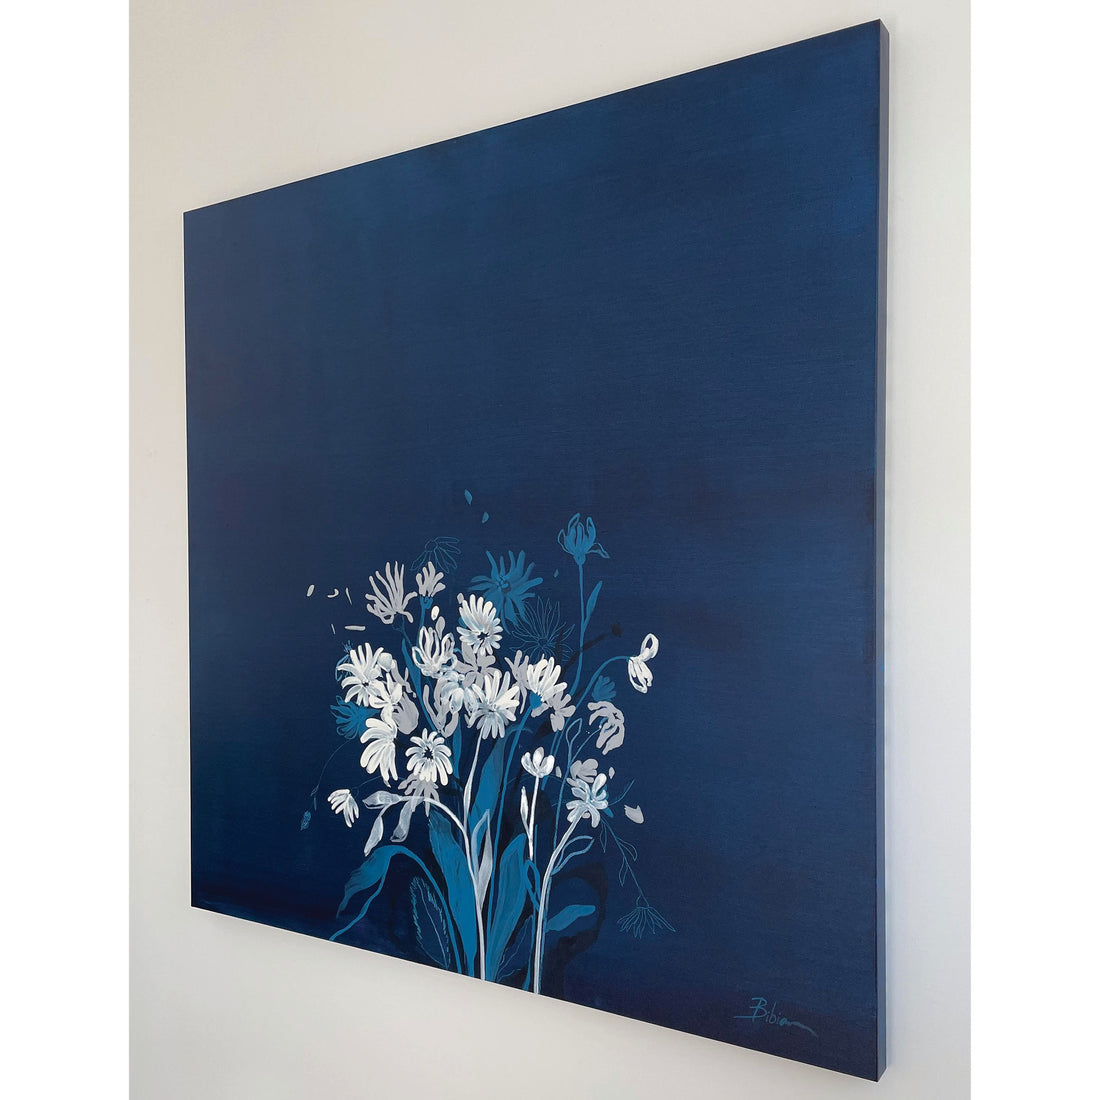 Bibiana Hooper "Daisies Wisdom 4" abstract floral painting Canadian artist Kefi Art Gallery